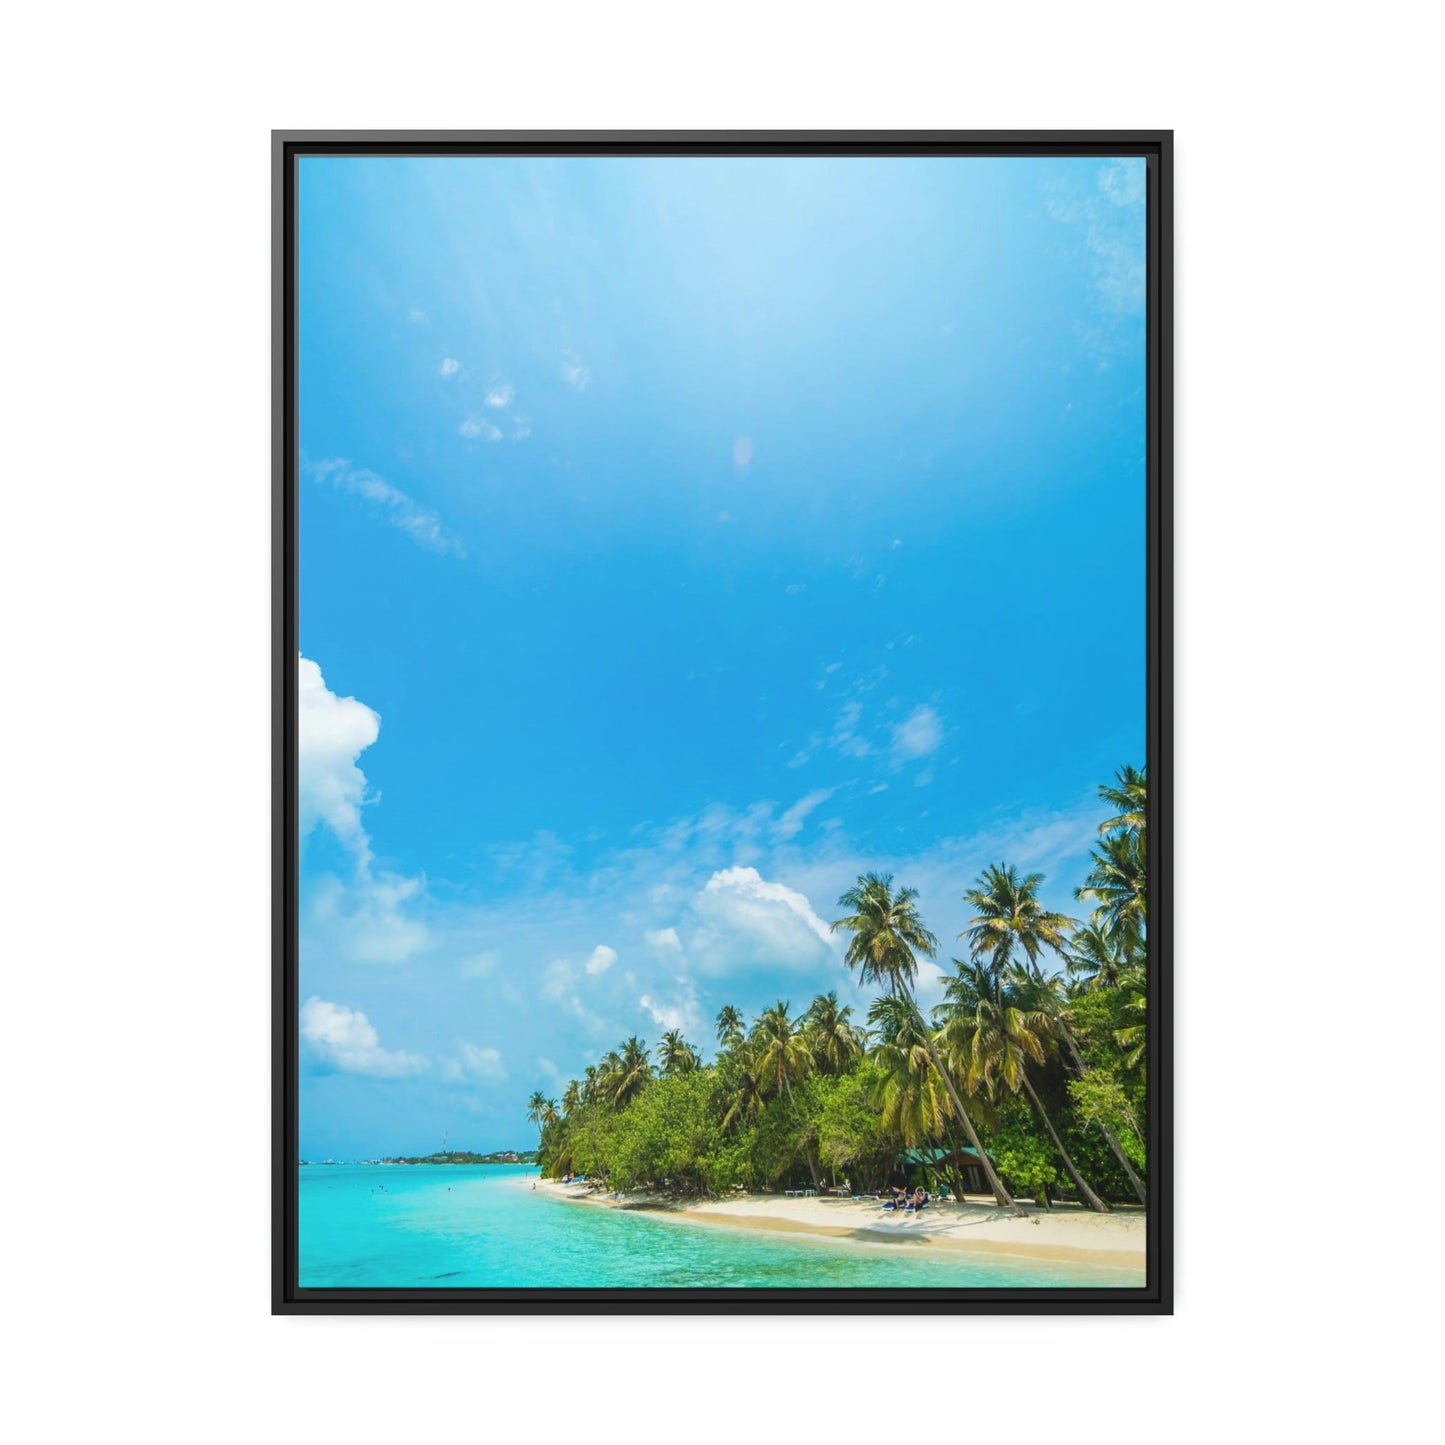 Coastal Charm: Art Print of a Beautiful Island Beach Scene on a Framed Poster